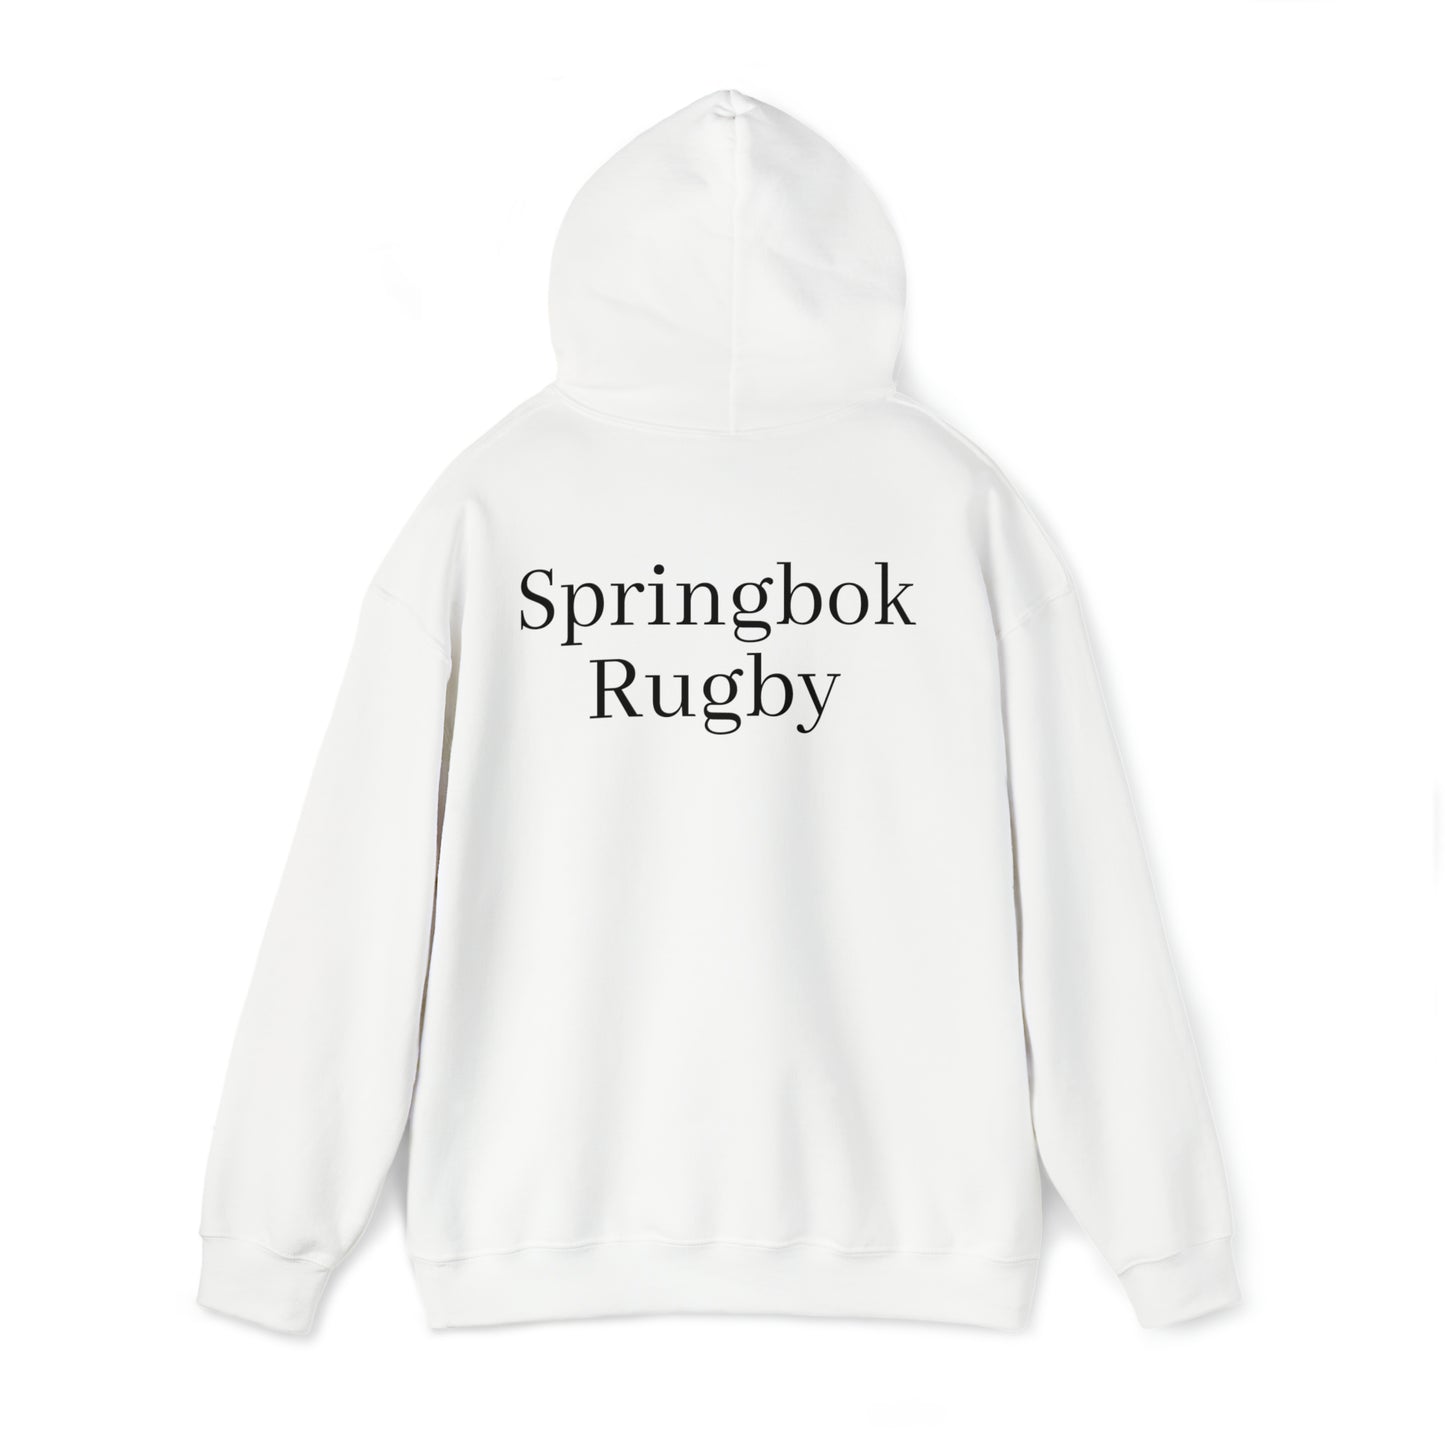 Springboks lifting RWC - light hoodies